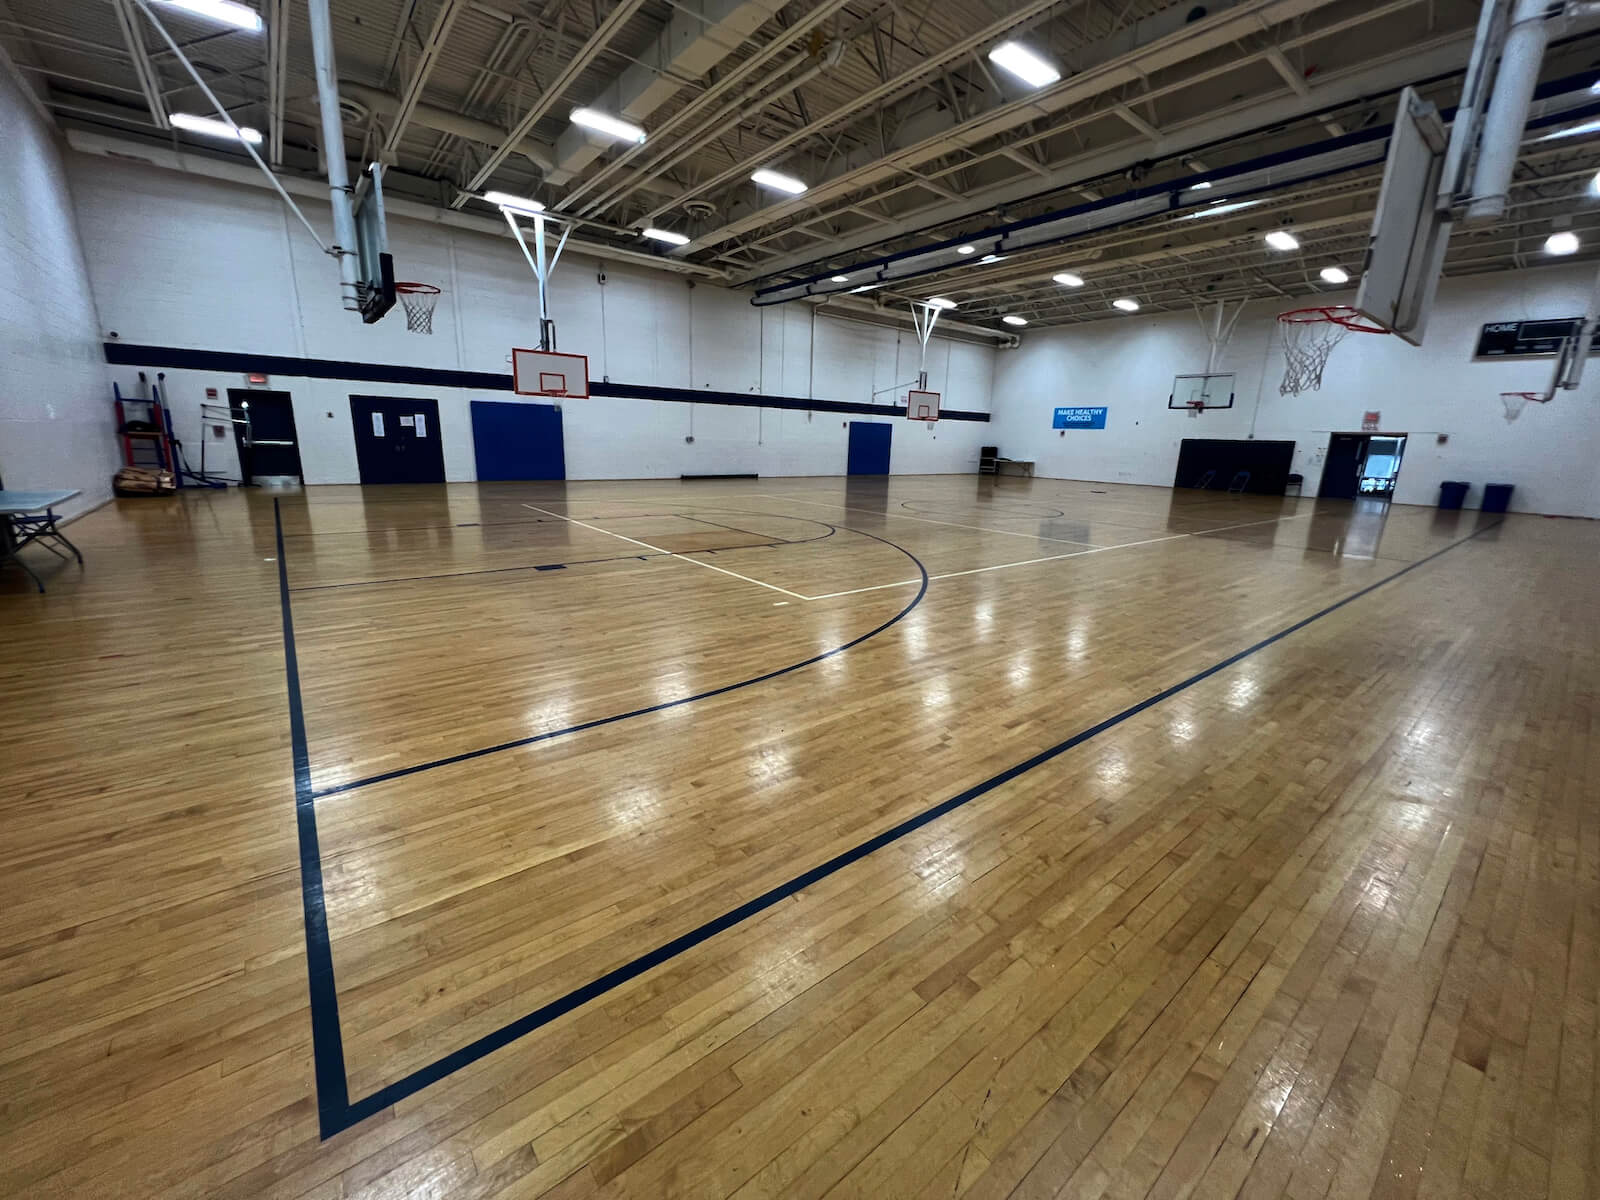 Walnut Street YMCA Gymnasium Transformation